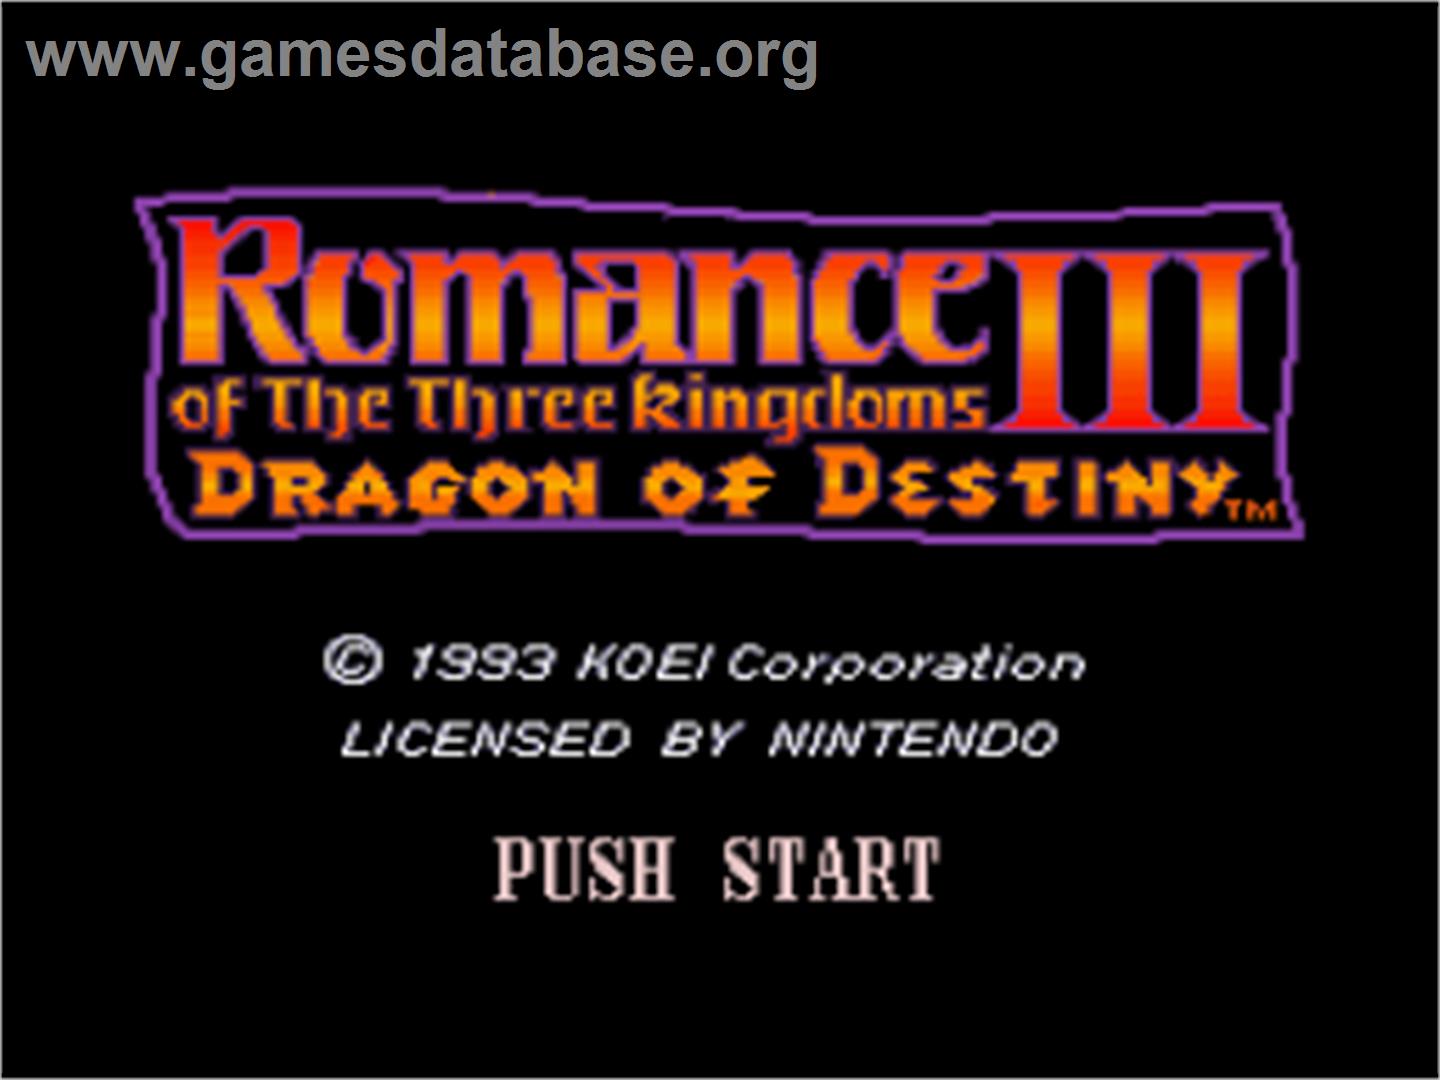 Romance of the Three Kingdoms III: Dragon of Destiny - Nintendo SNES - Artwork - Title Screen